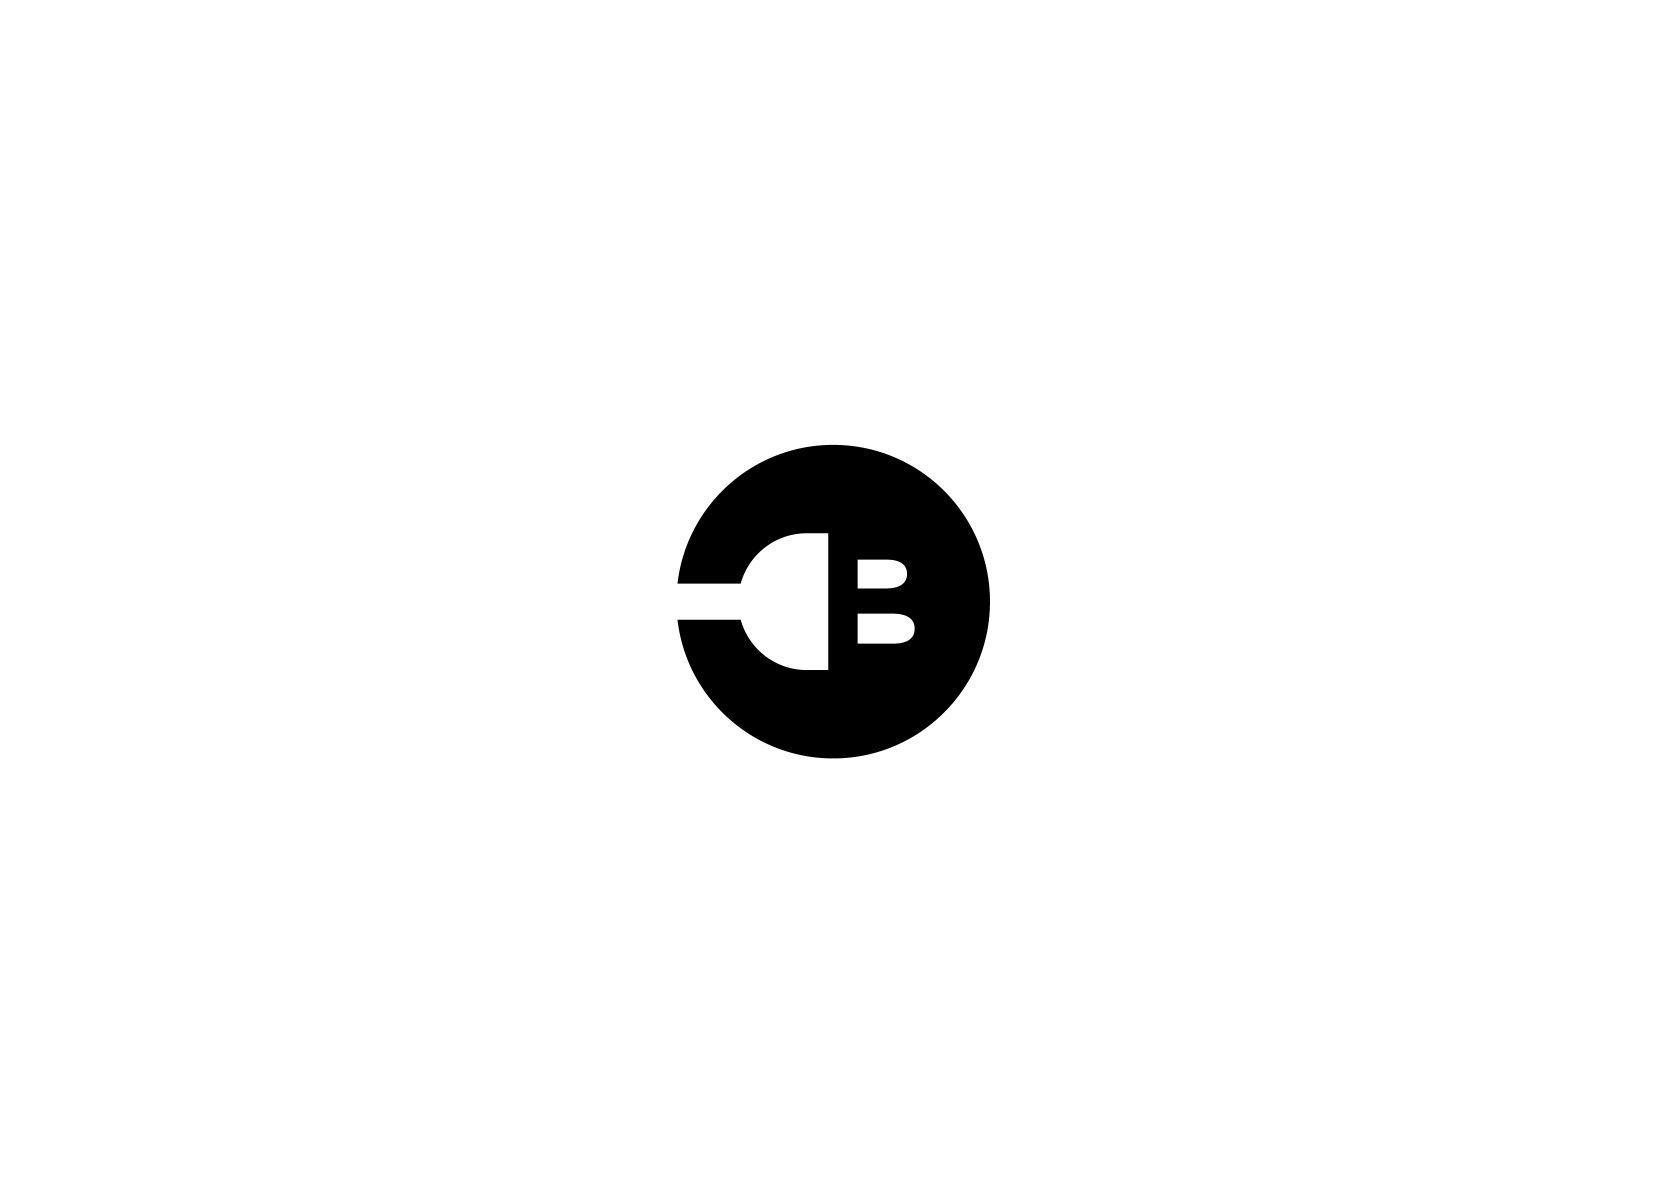 Plug in Purple and White Logo - B electric plug logo design Balsan Trading Company logo by Hadeel S ...